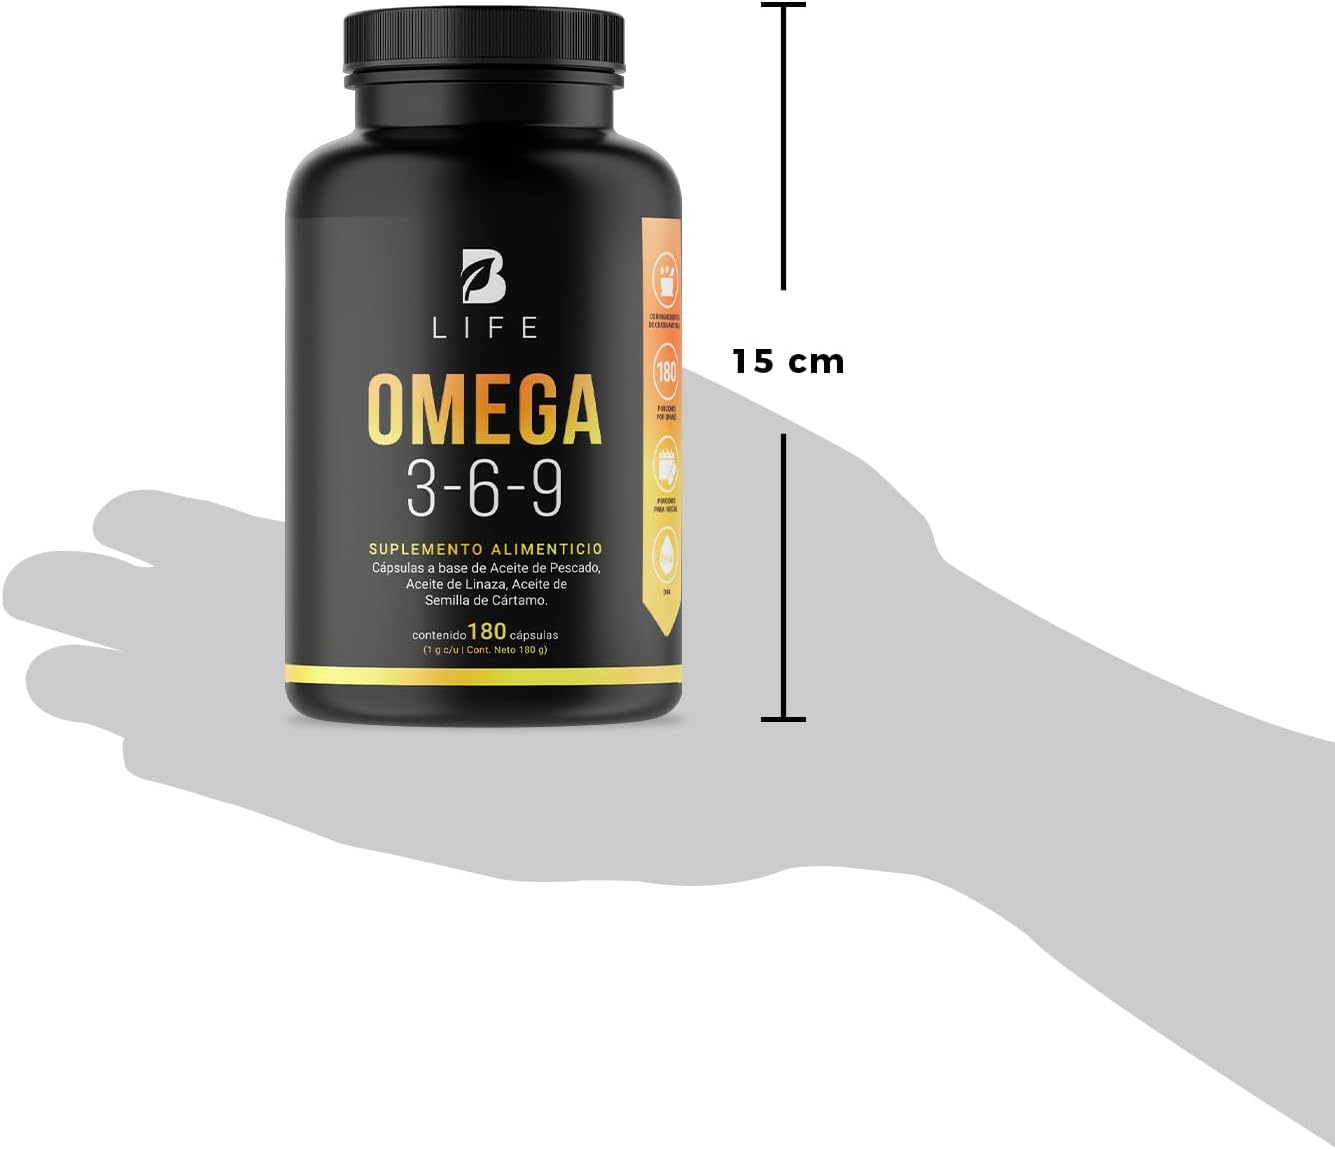 Omega 3-6-9 de 180 Cápsulas con 1000 mg de concentración